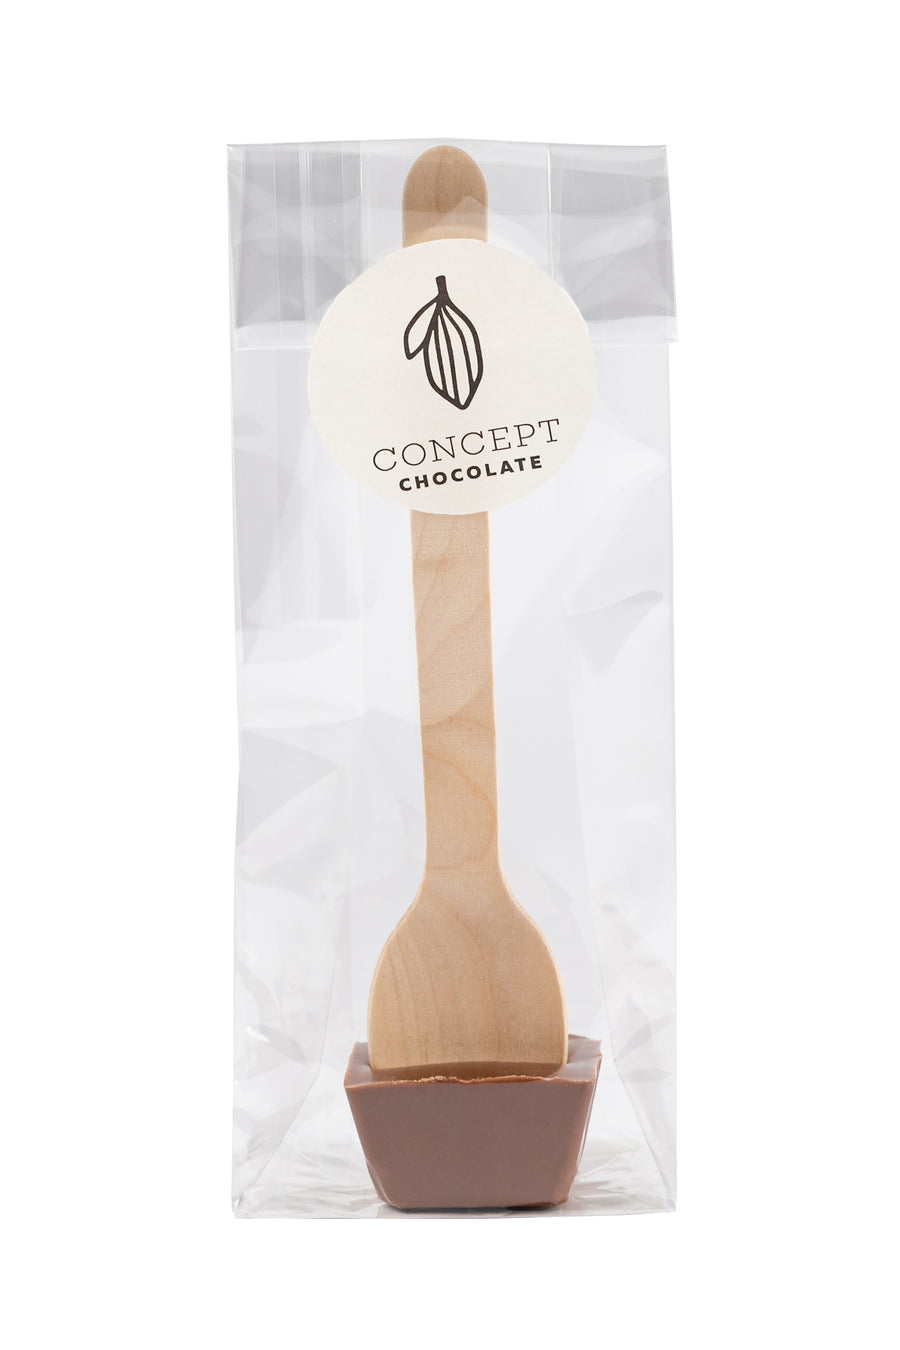 Cuillère chocolat chaud Lait 34% - 2x Choco spoon